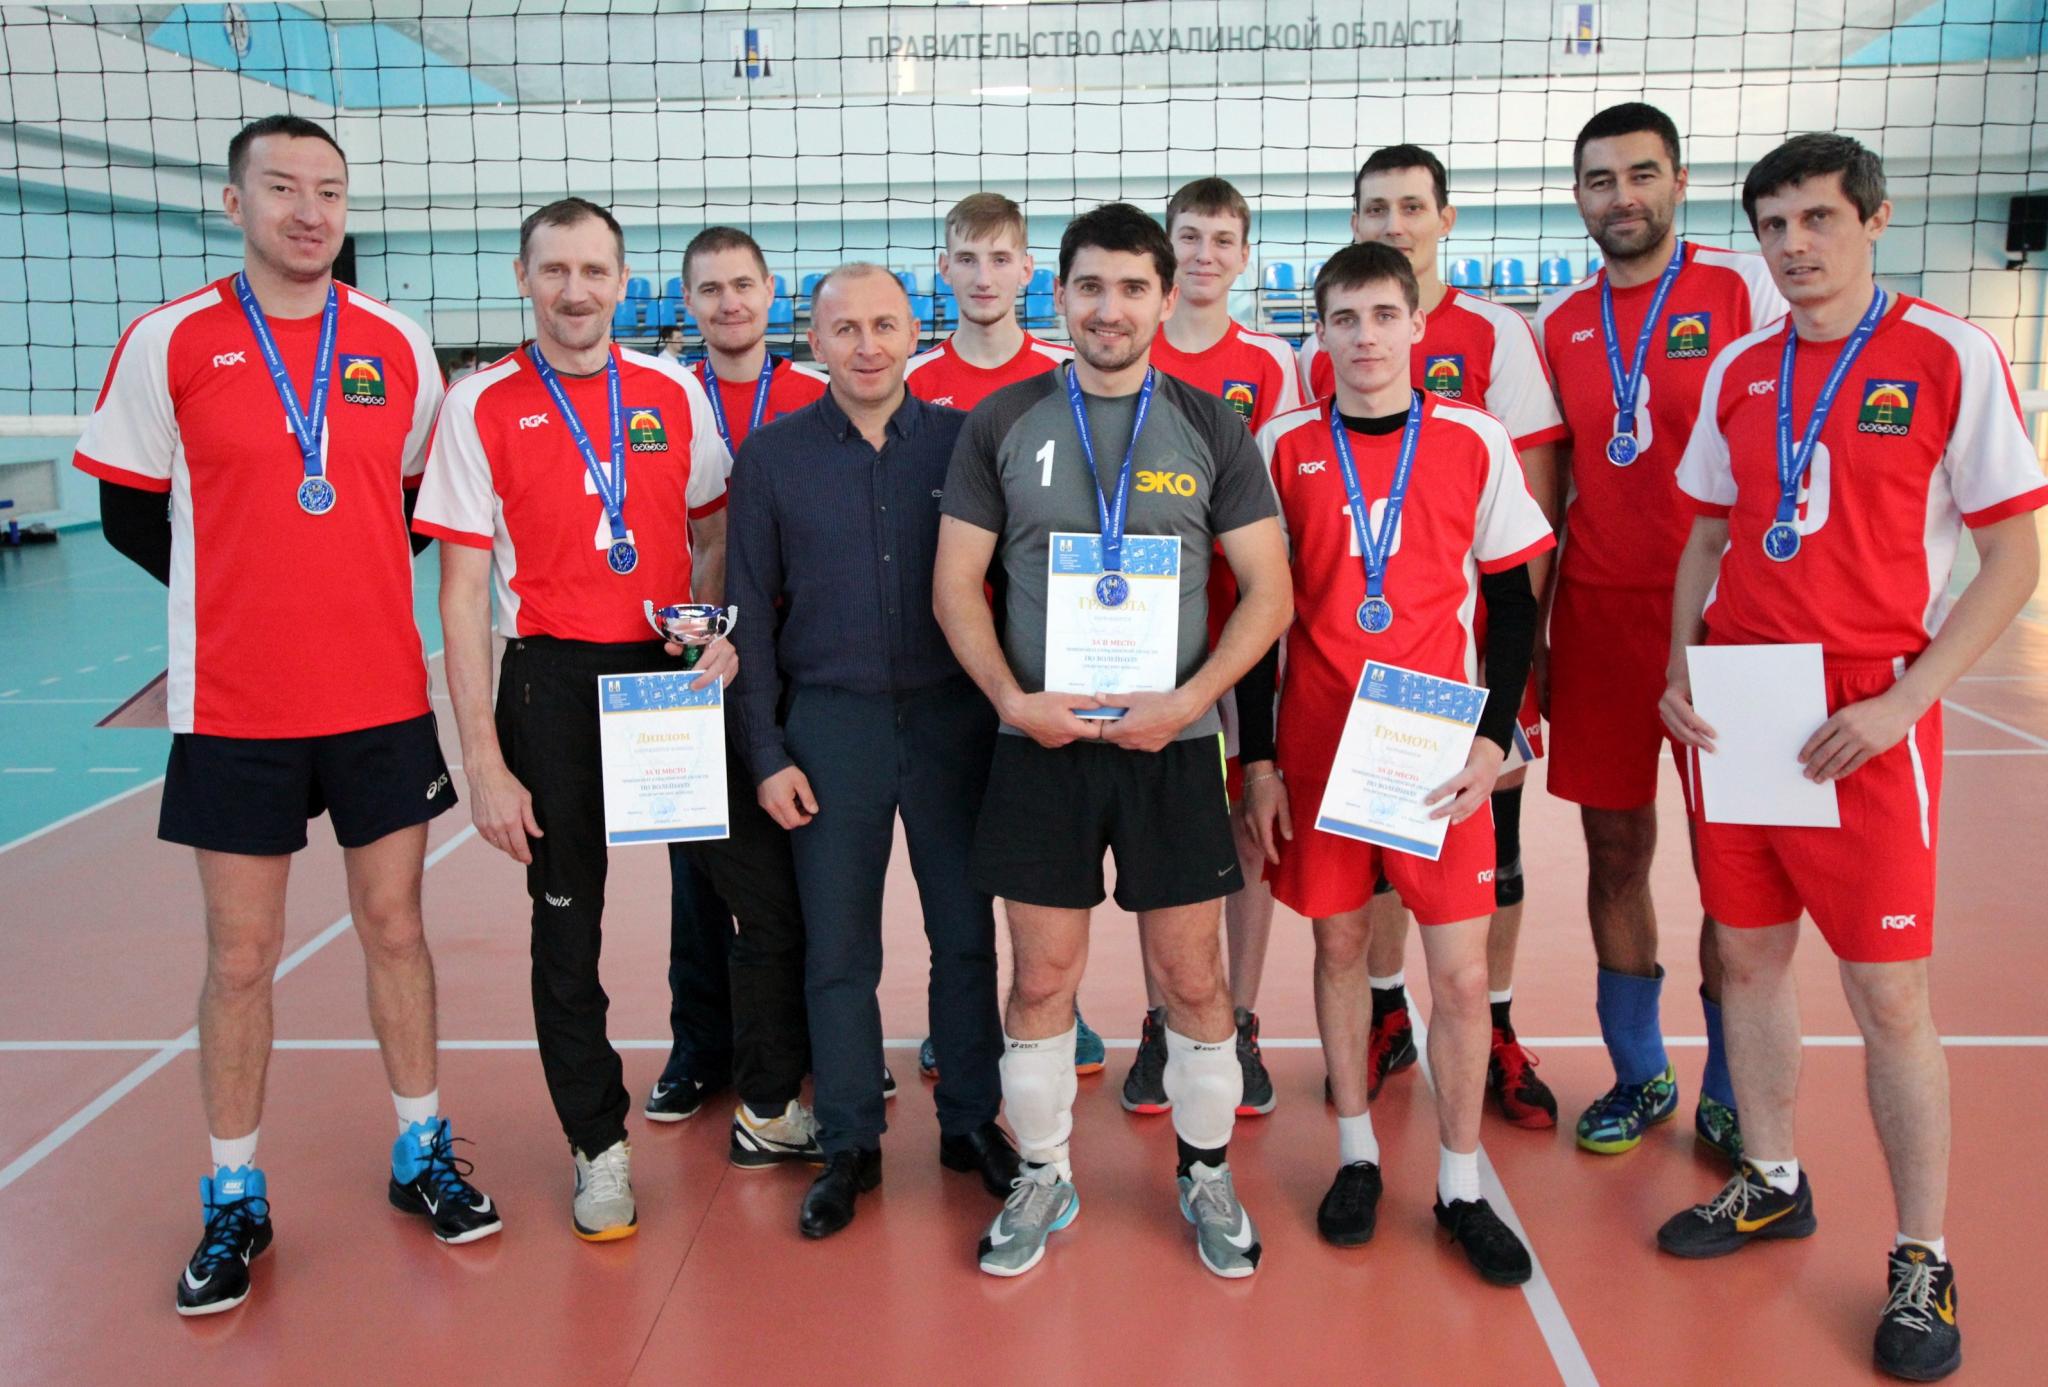 Чемпионат области по волейболу среди мужских команд